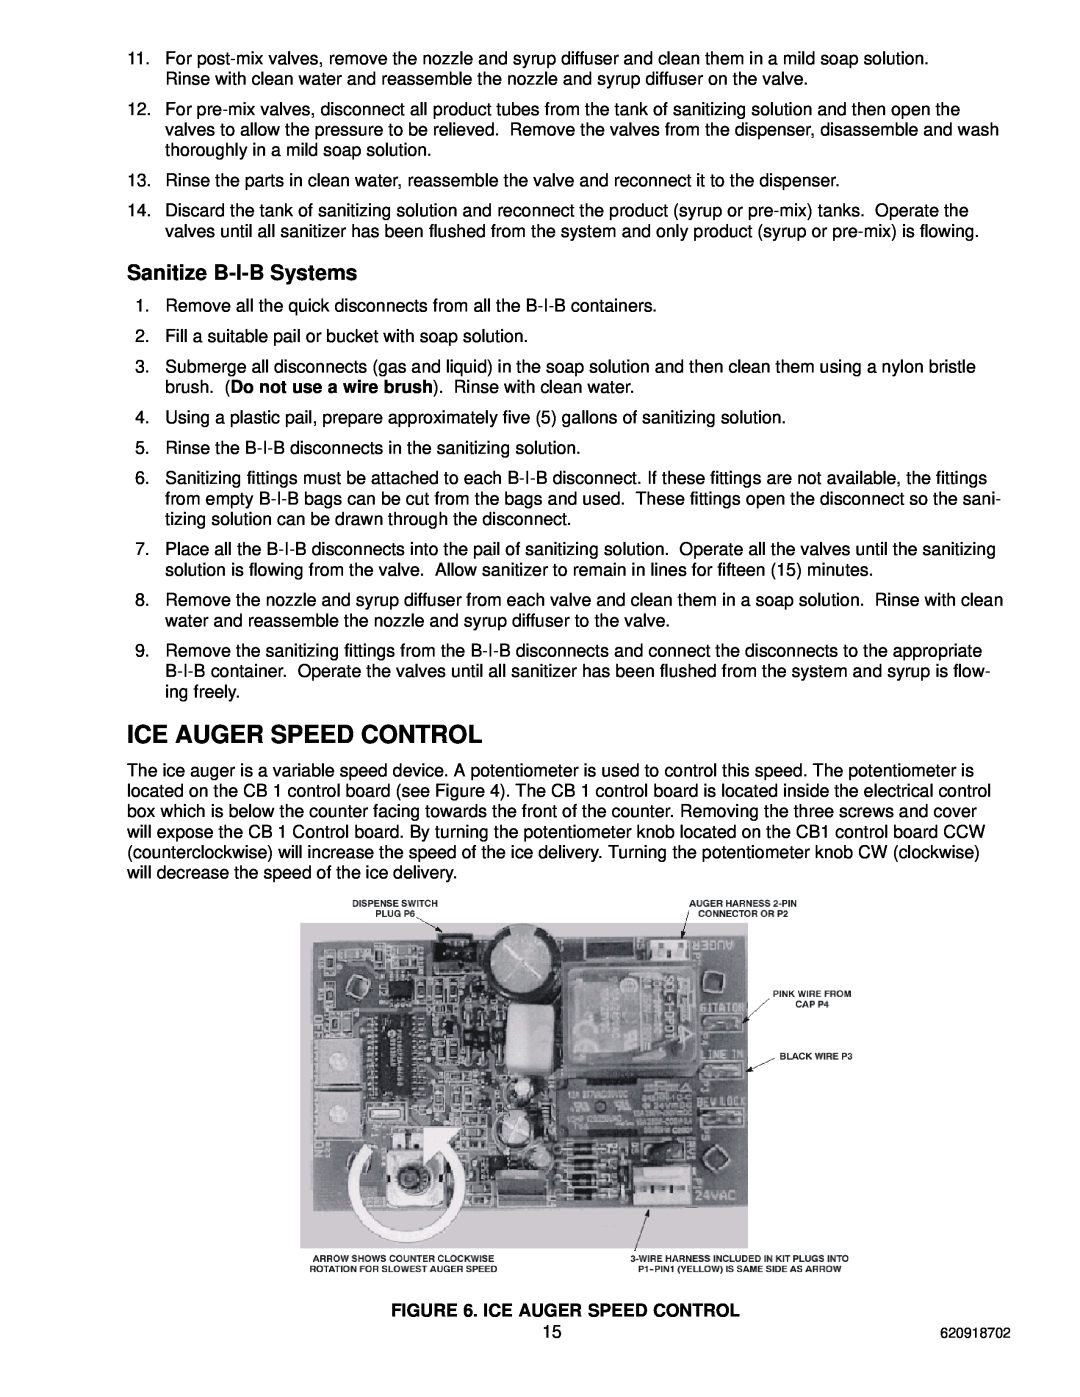 Cornelius PR150 BC manual Ice Auger Speed Control, Sanitize B-I-B Systems 